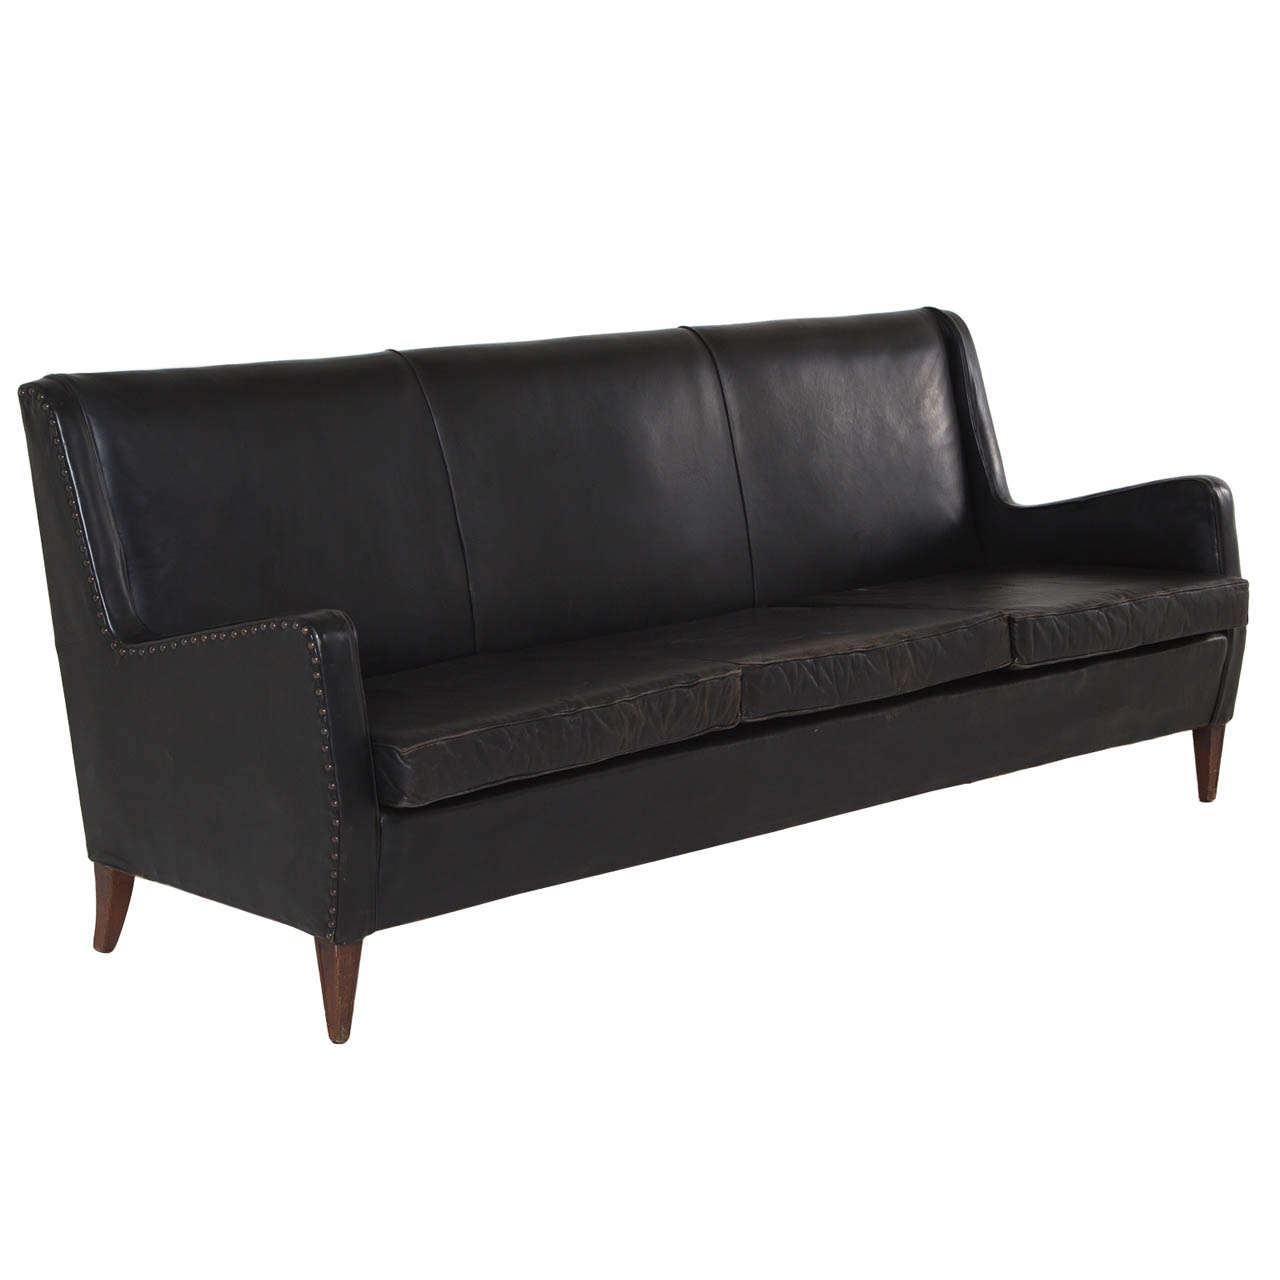 Three-Seat Sofa in Original Black Leather, Denmark, Circa 1950's